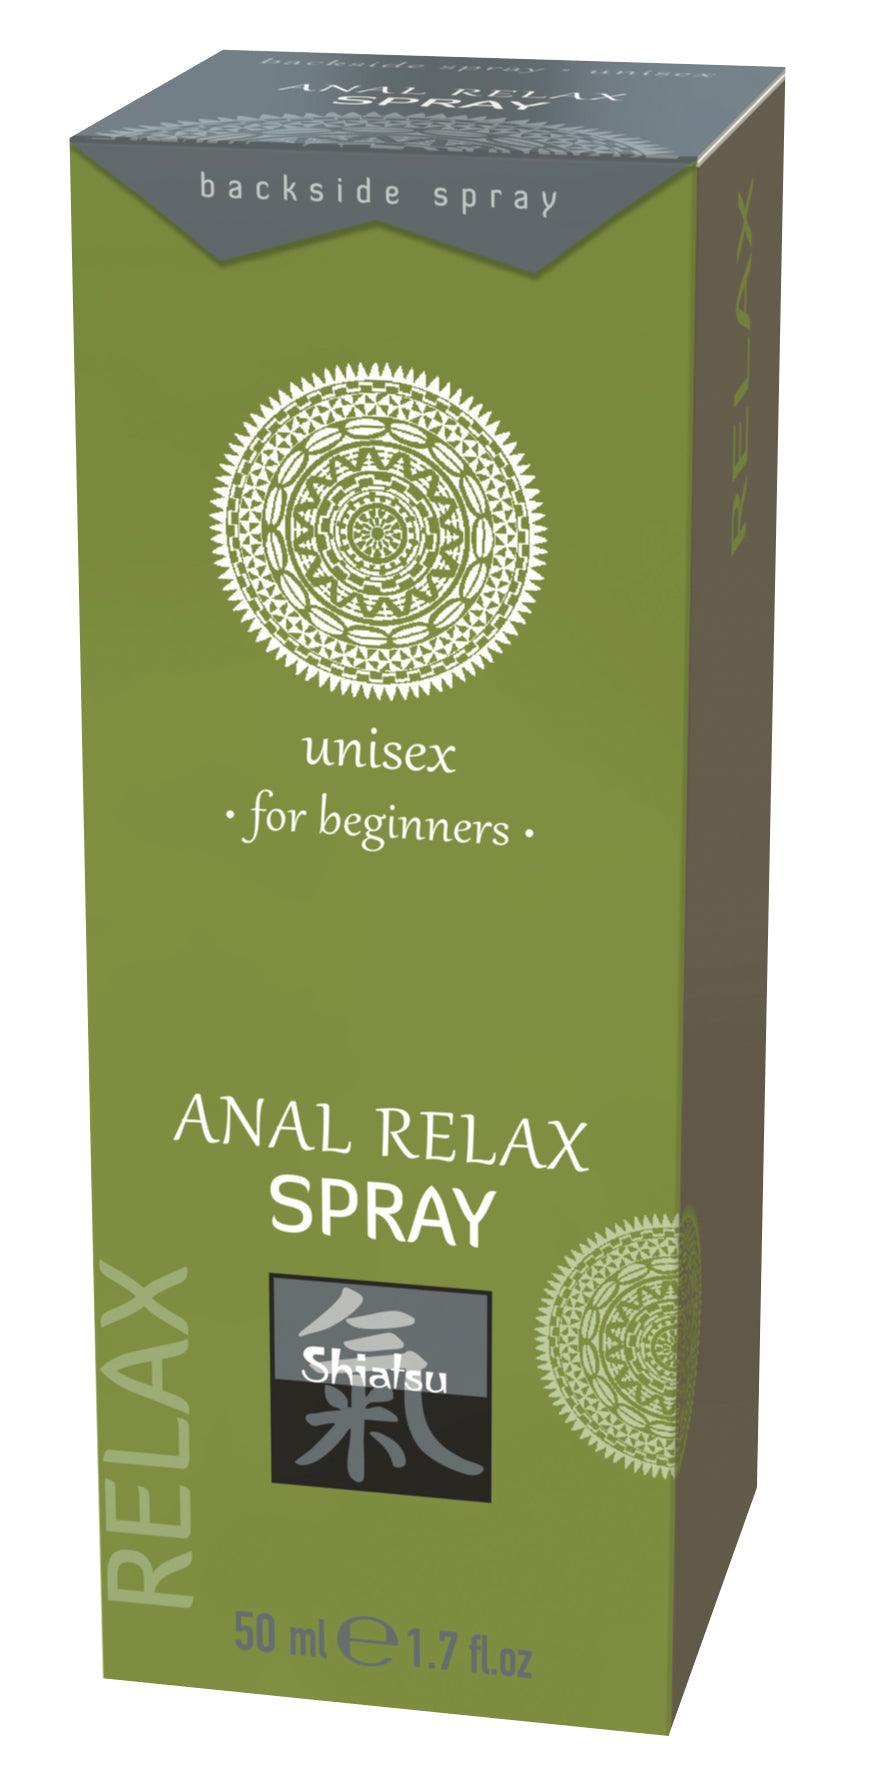 Shiatsu Anal Relax Spray Beginners 50ml - Take A Peek